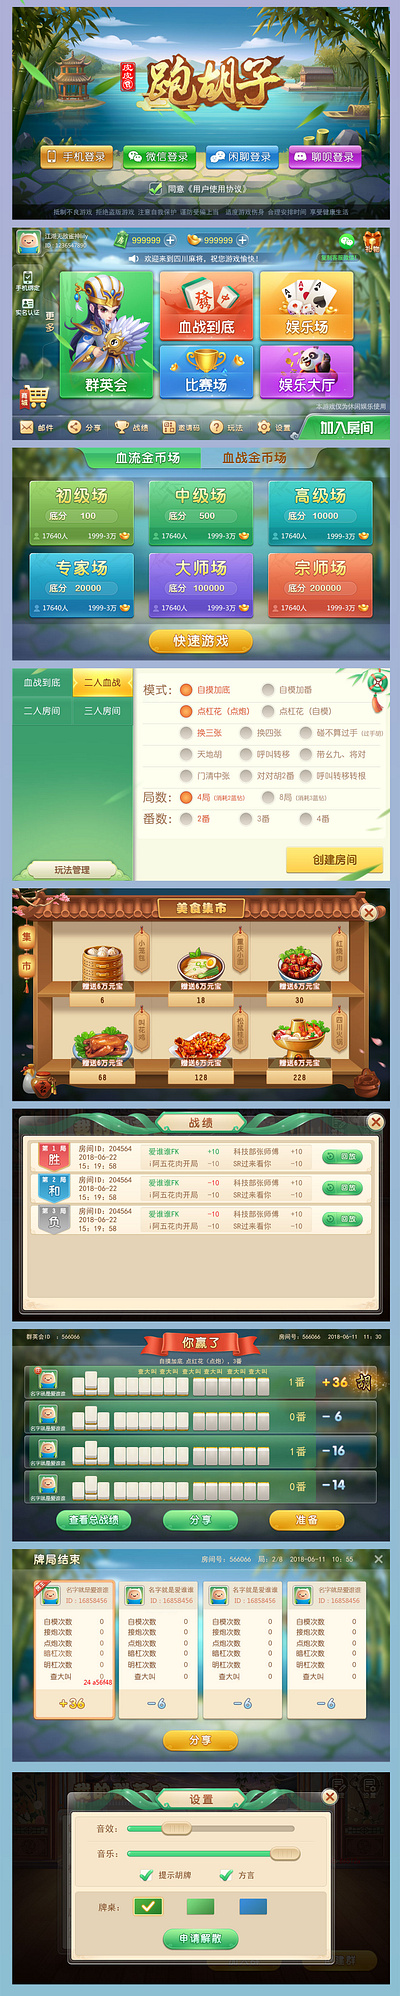 Chinese-style Mahjong game UI design design game art ui